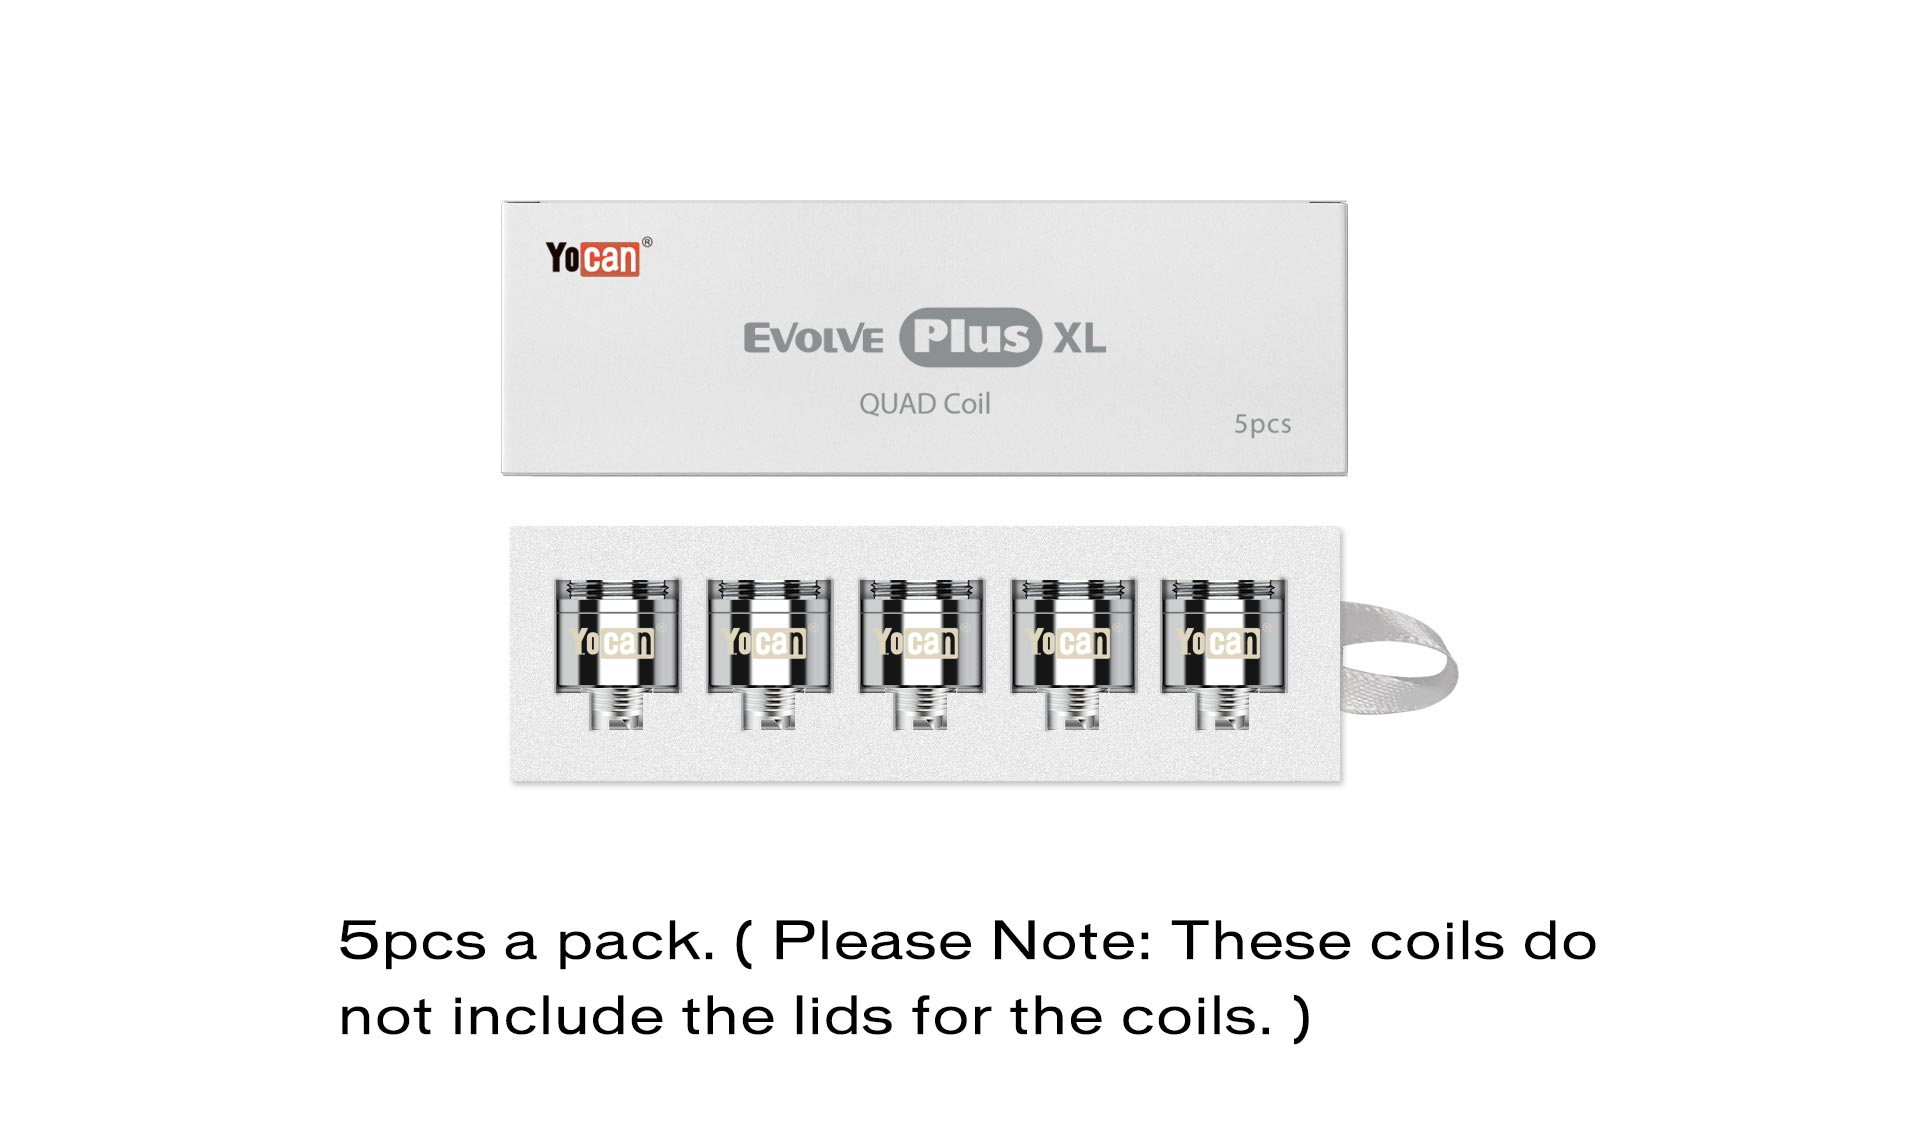 Yocan Evolve Plus XL Quad coil - 5 pcs - 2020 version package box